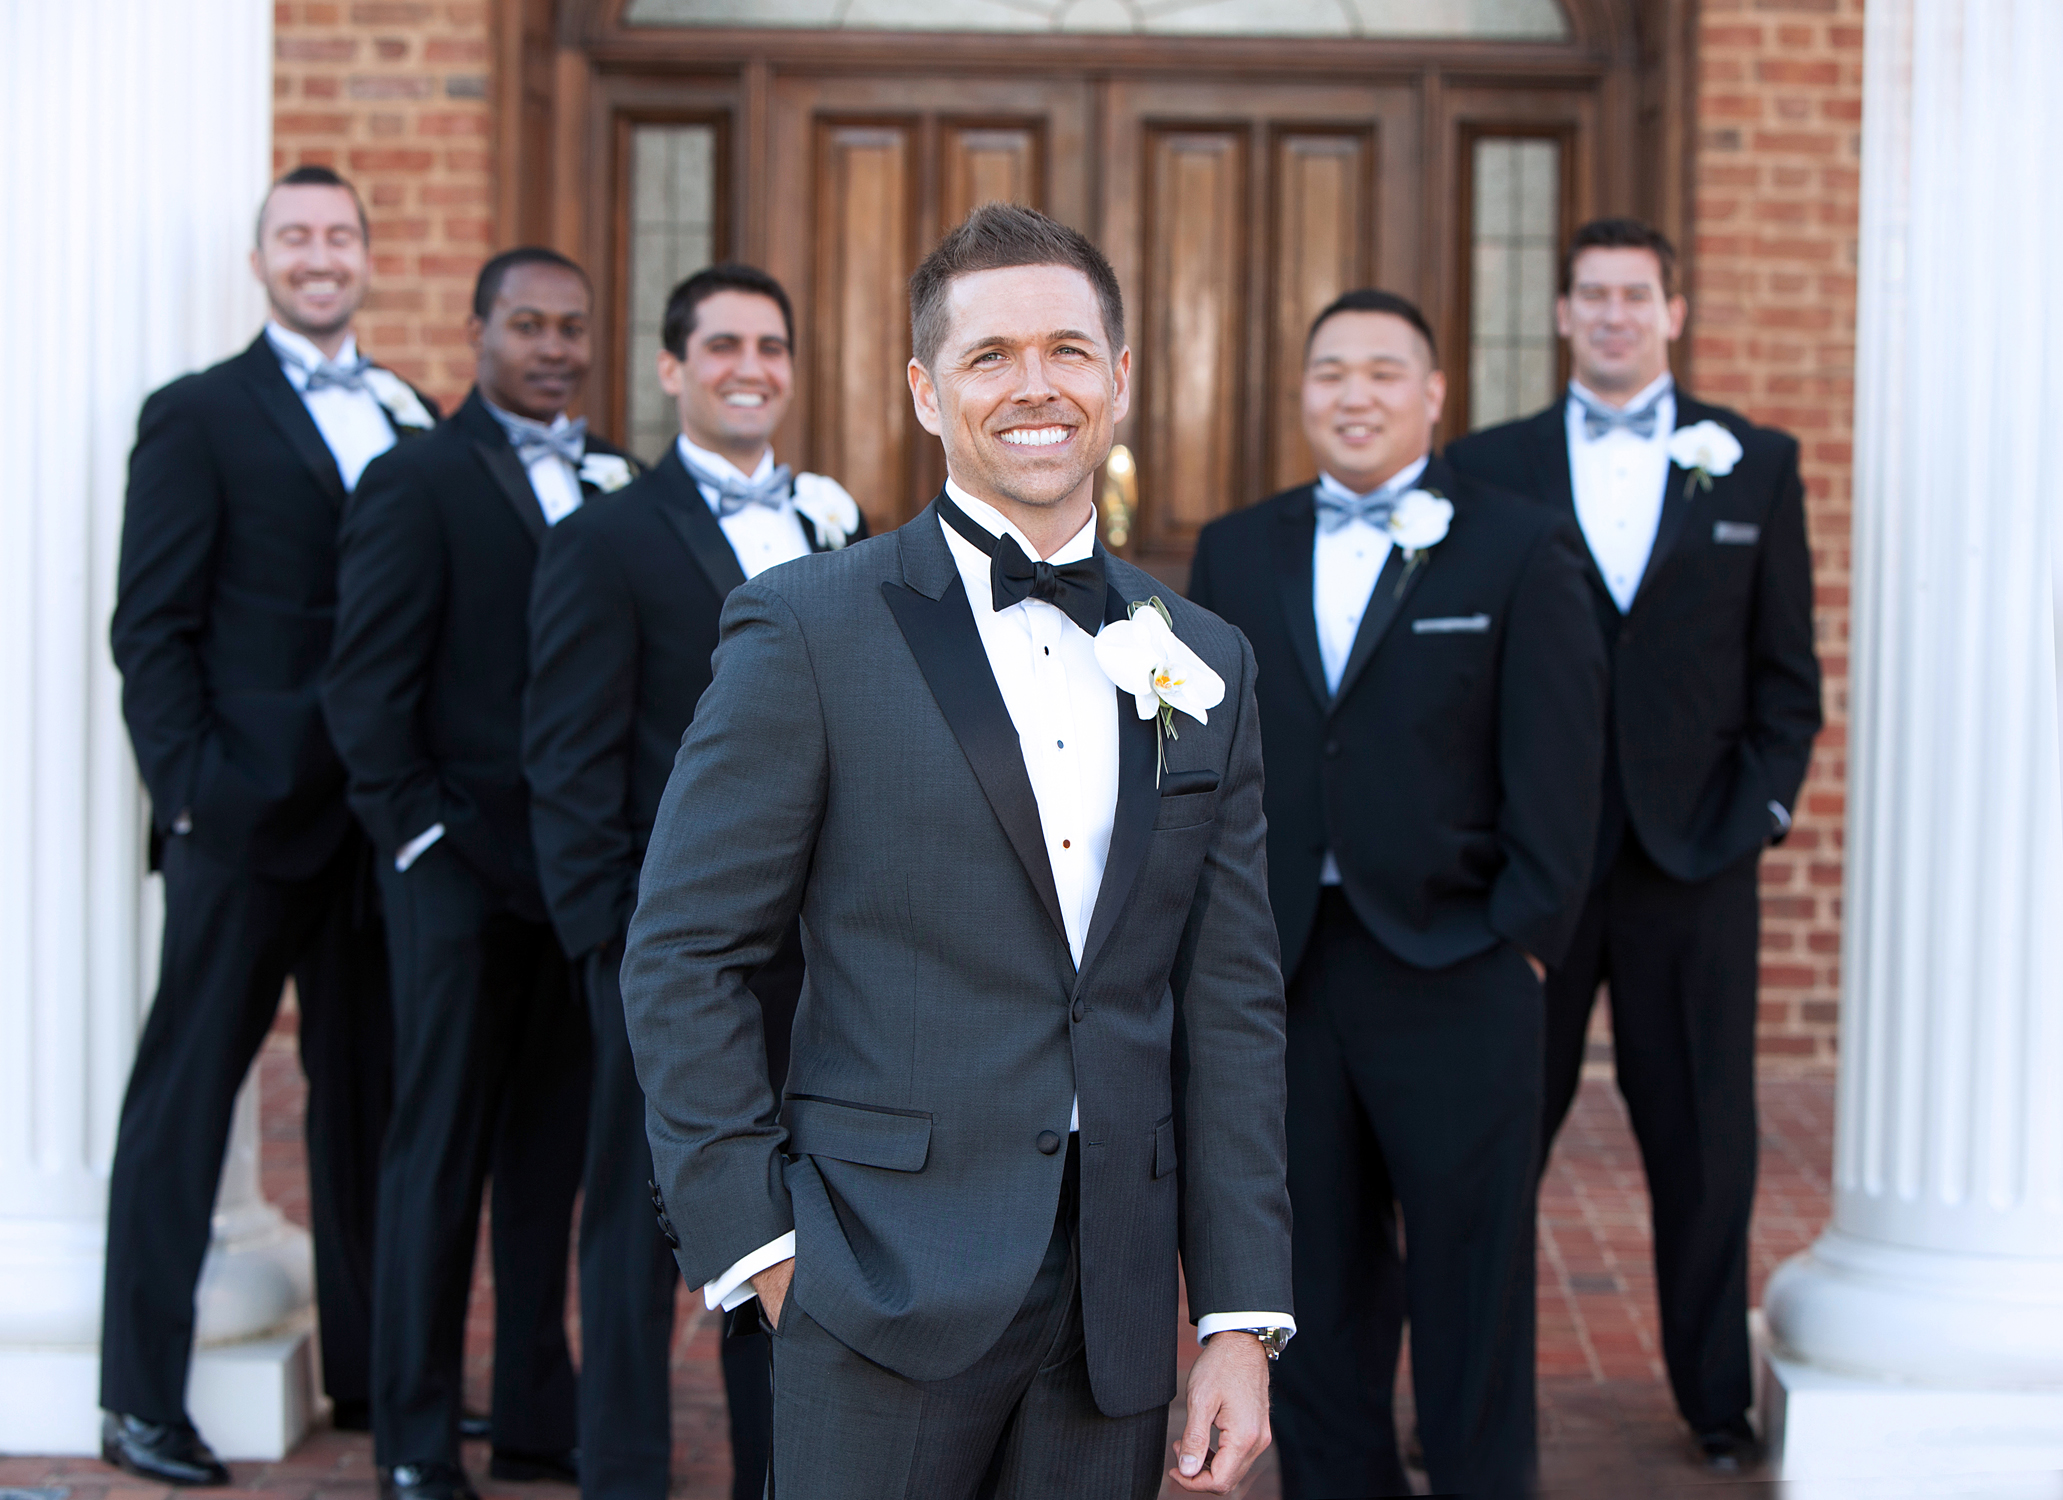 Men in elegant tuxedos pose for formal photograph